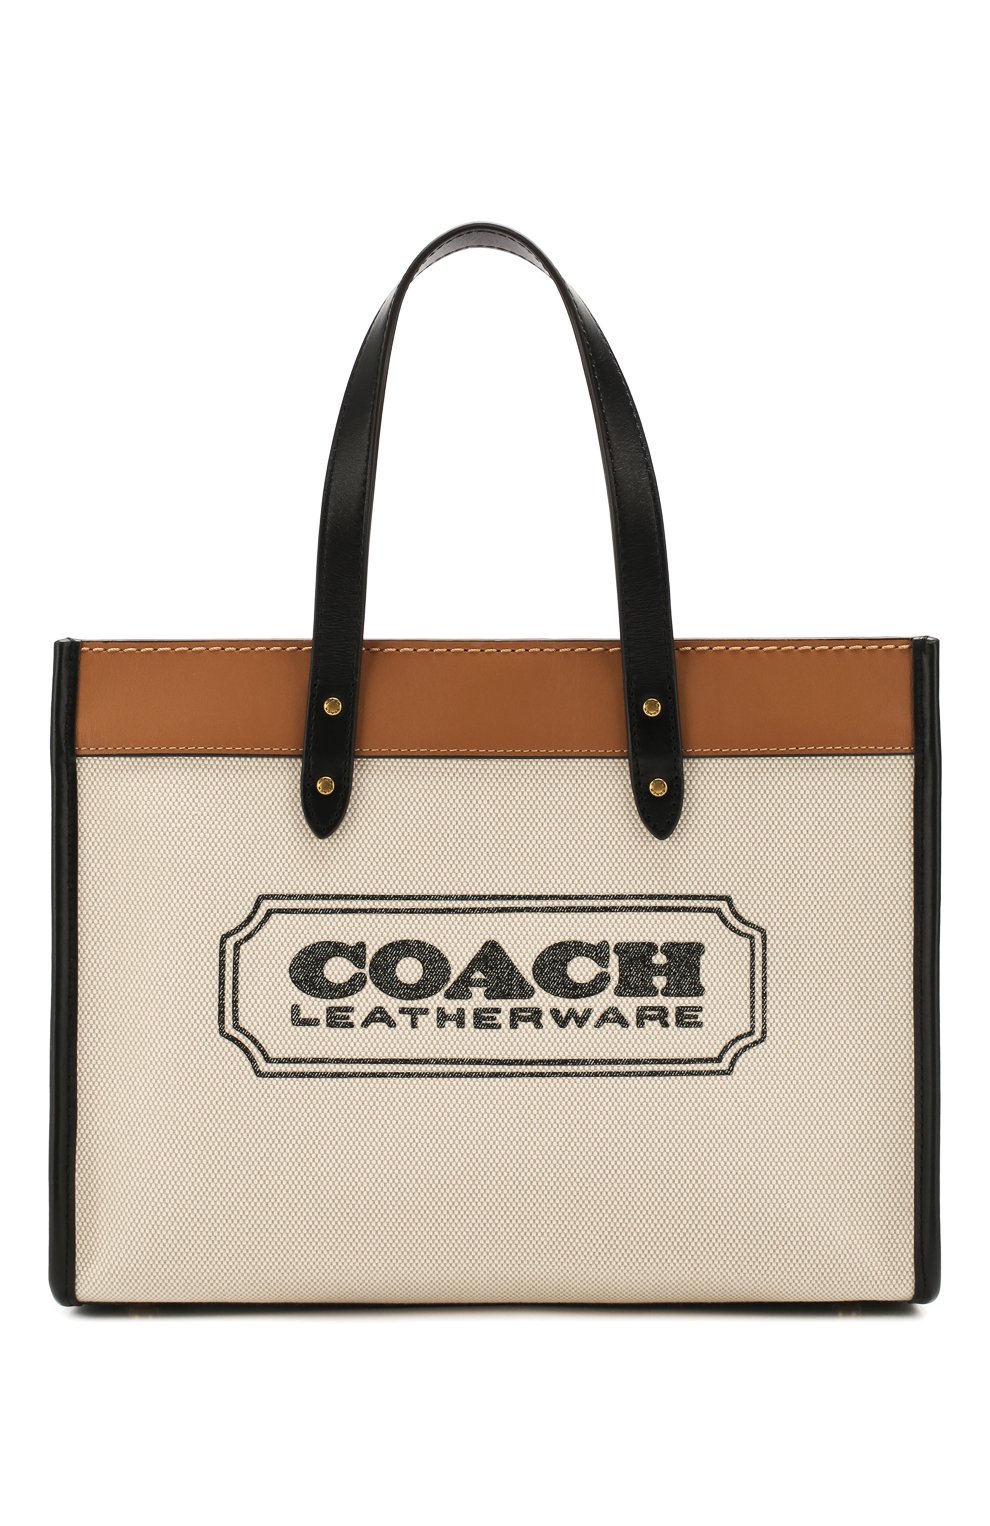 Coach Leatherware сумка тоут